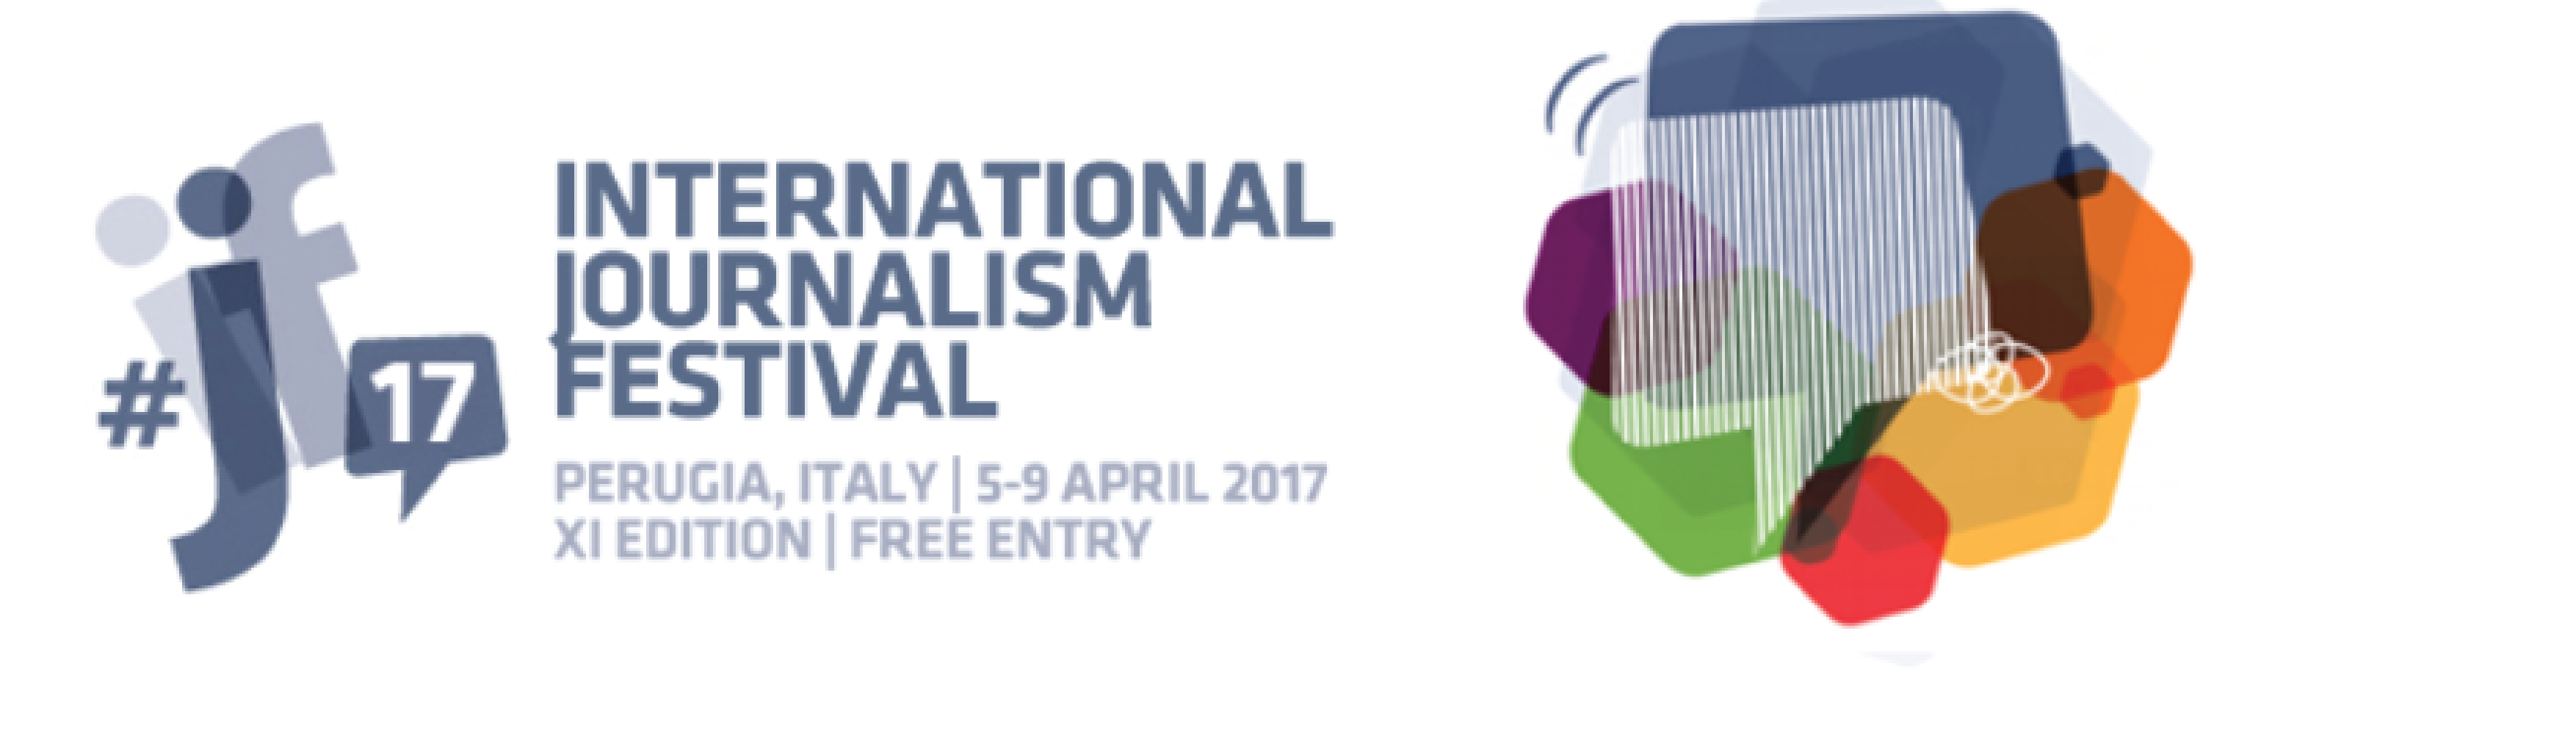 international-journalism-festival-perugia_la-chiave-di-sophia-01